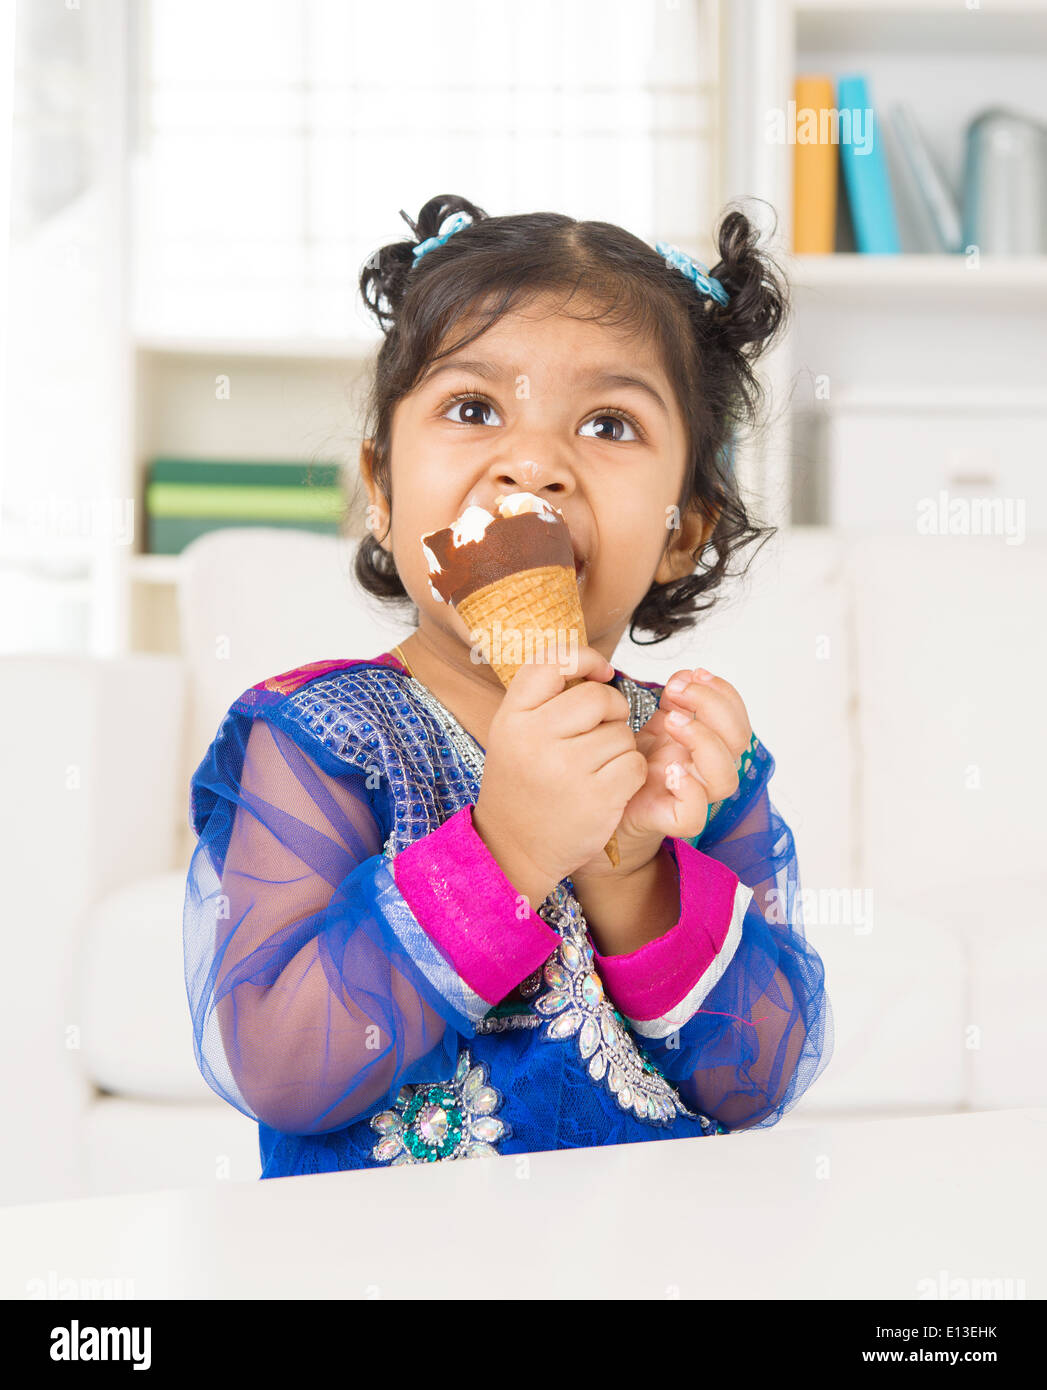 Eating ice cream. Indian Asian girl enjoying an ice cream. Beautiful child model at home. Stock Photo